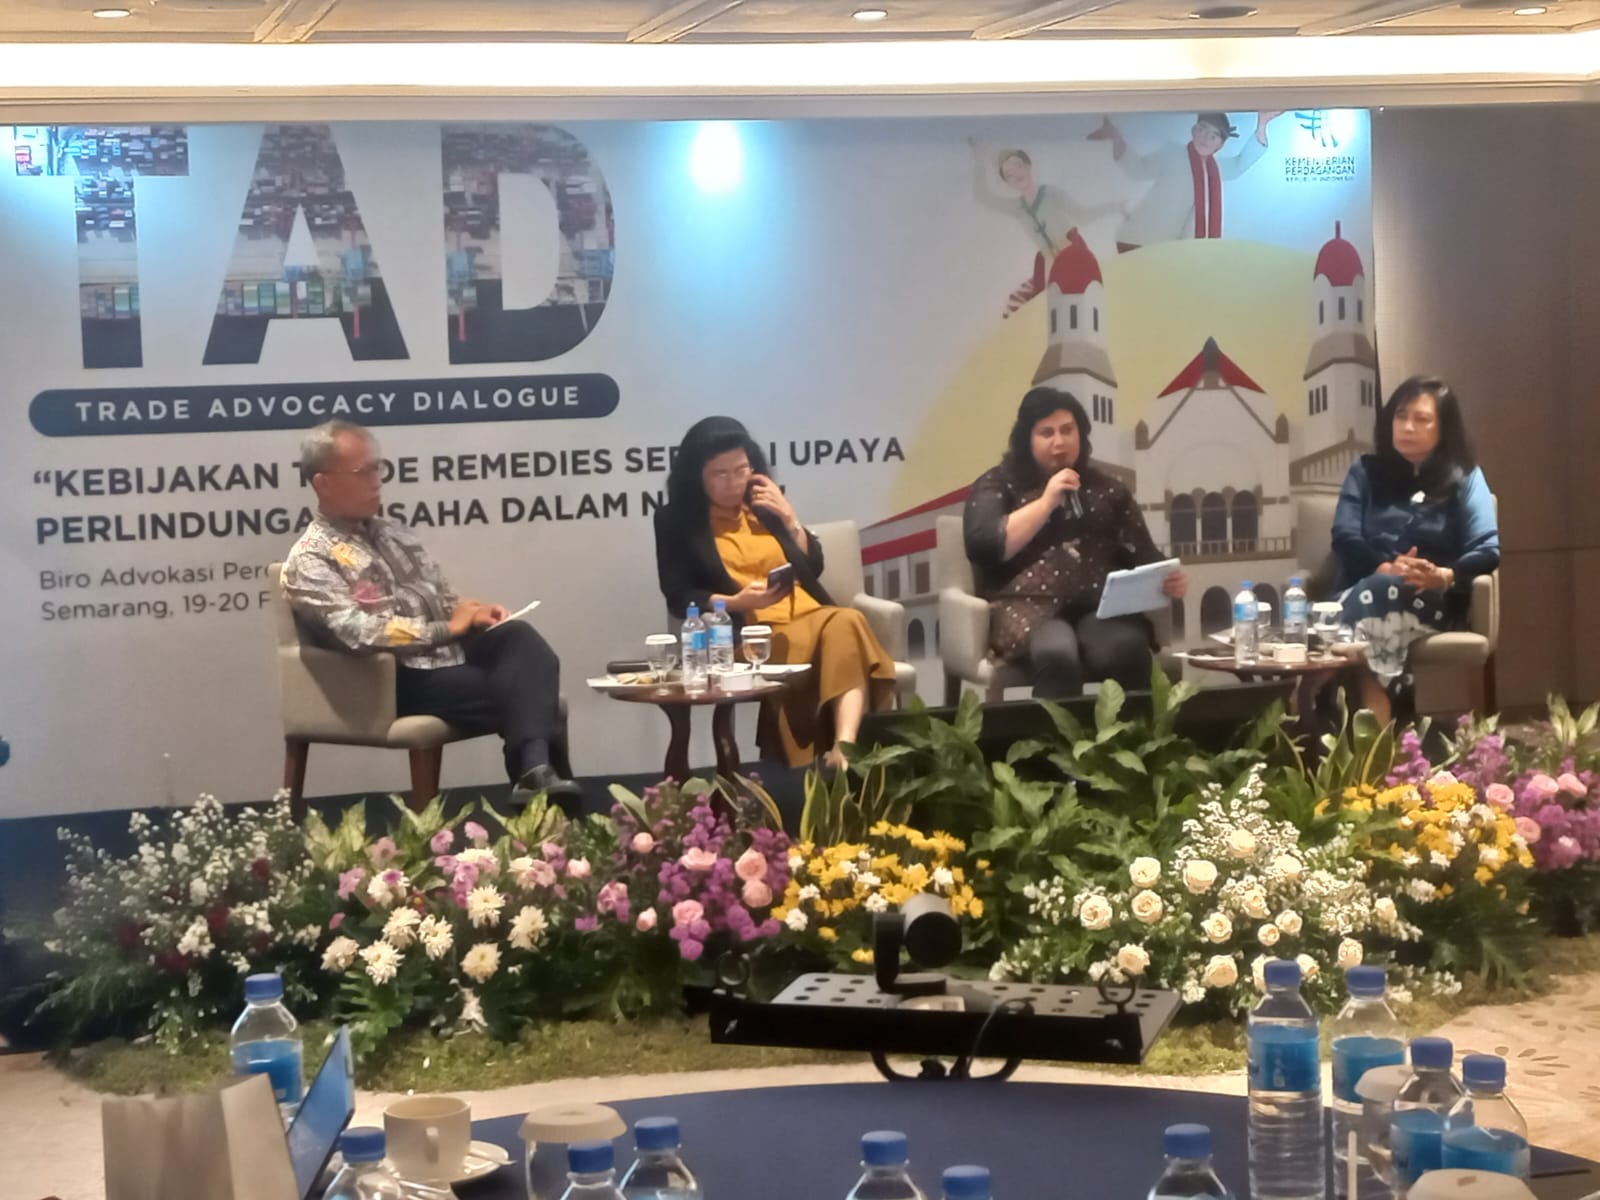 Trade Advocacy Dialogue/TAD dengan tema "Kebijakan Trade Remedies Sebagai Upaya Pendukung Usaha Dalam Negeri"